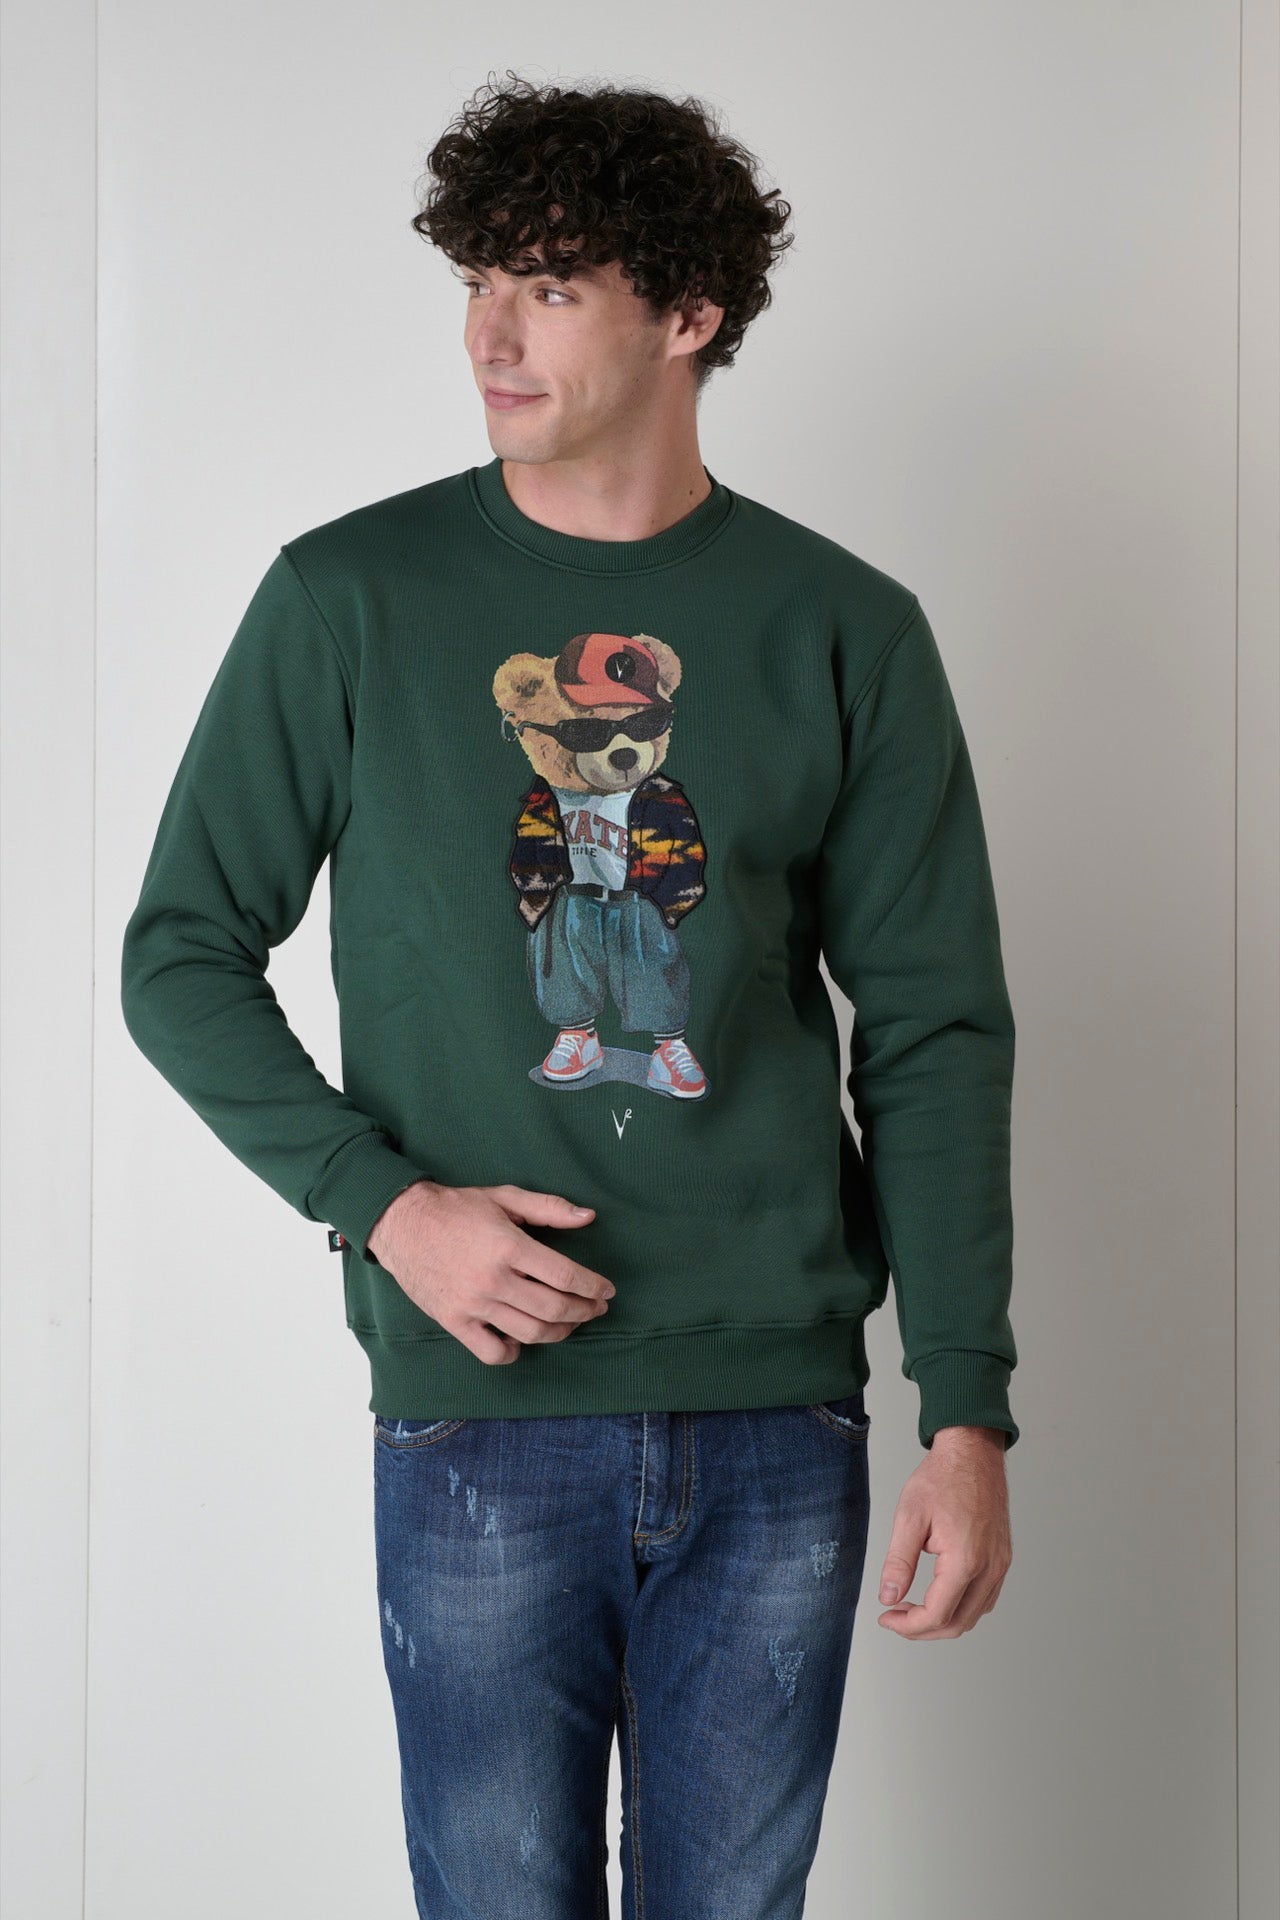 Green sweatshirt with Teddy print and Green Aztec fabric insert